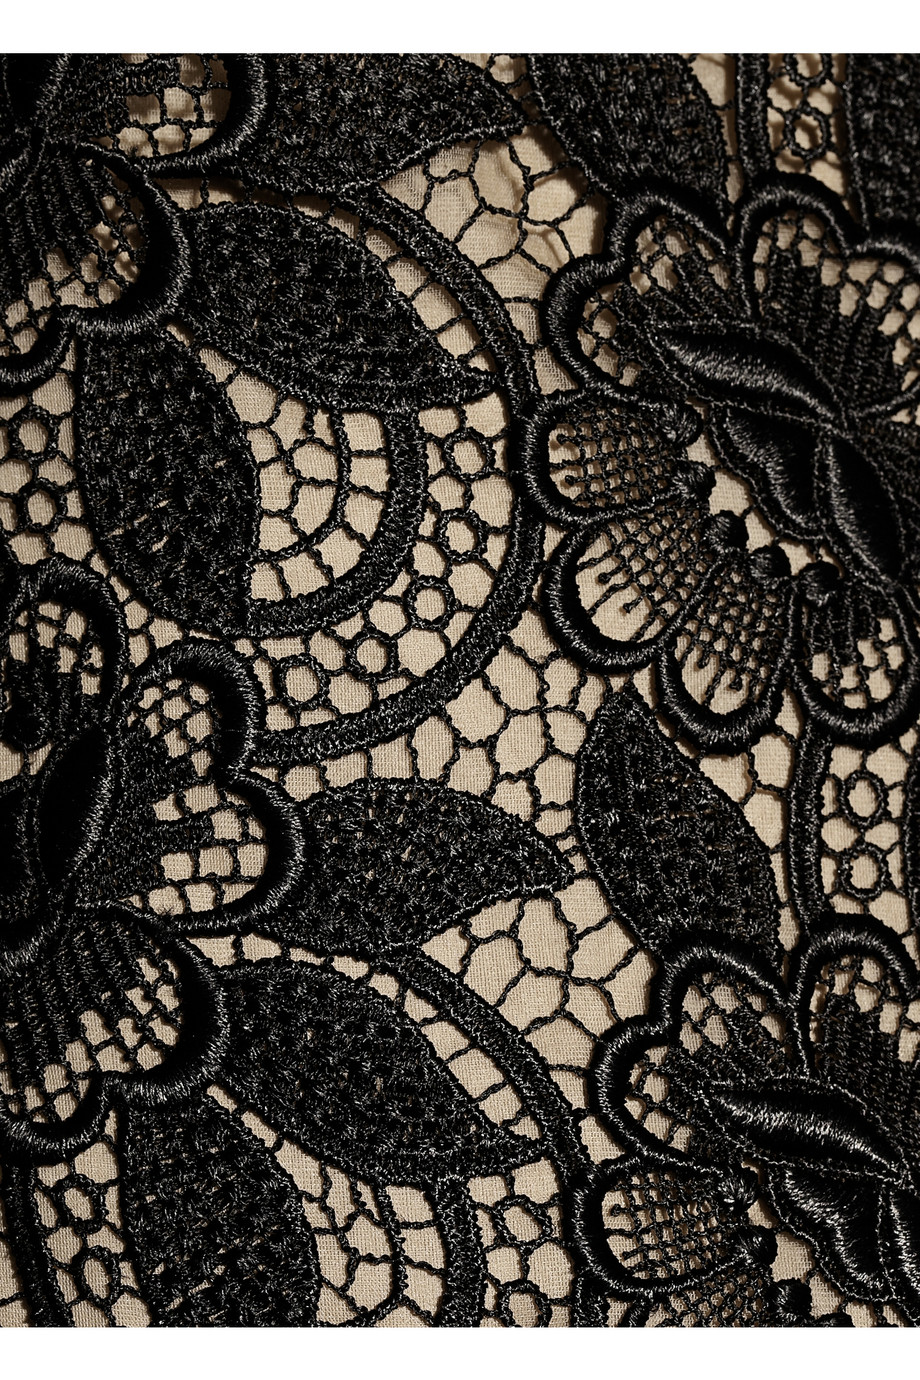 Alexander mcqueen Moth-print Crepe Dress in Black | Lyst